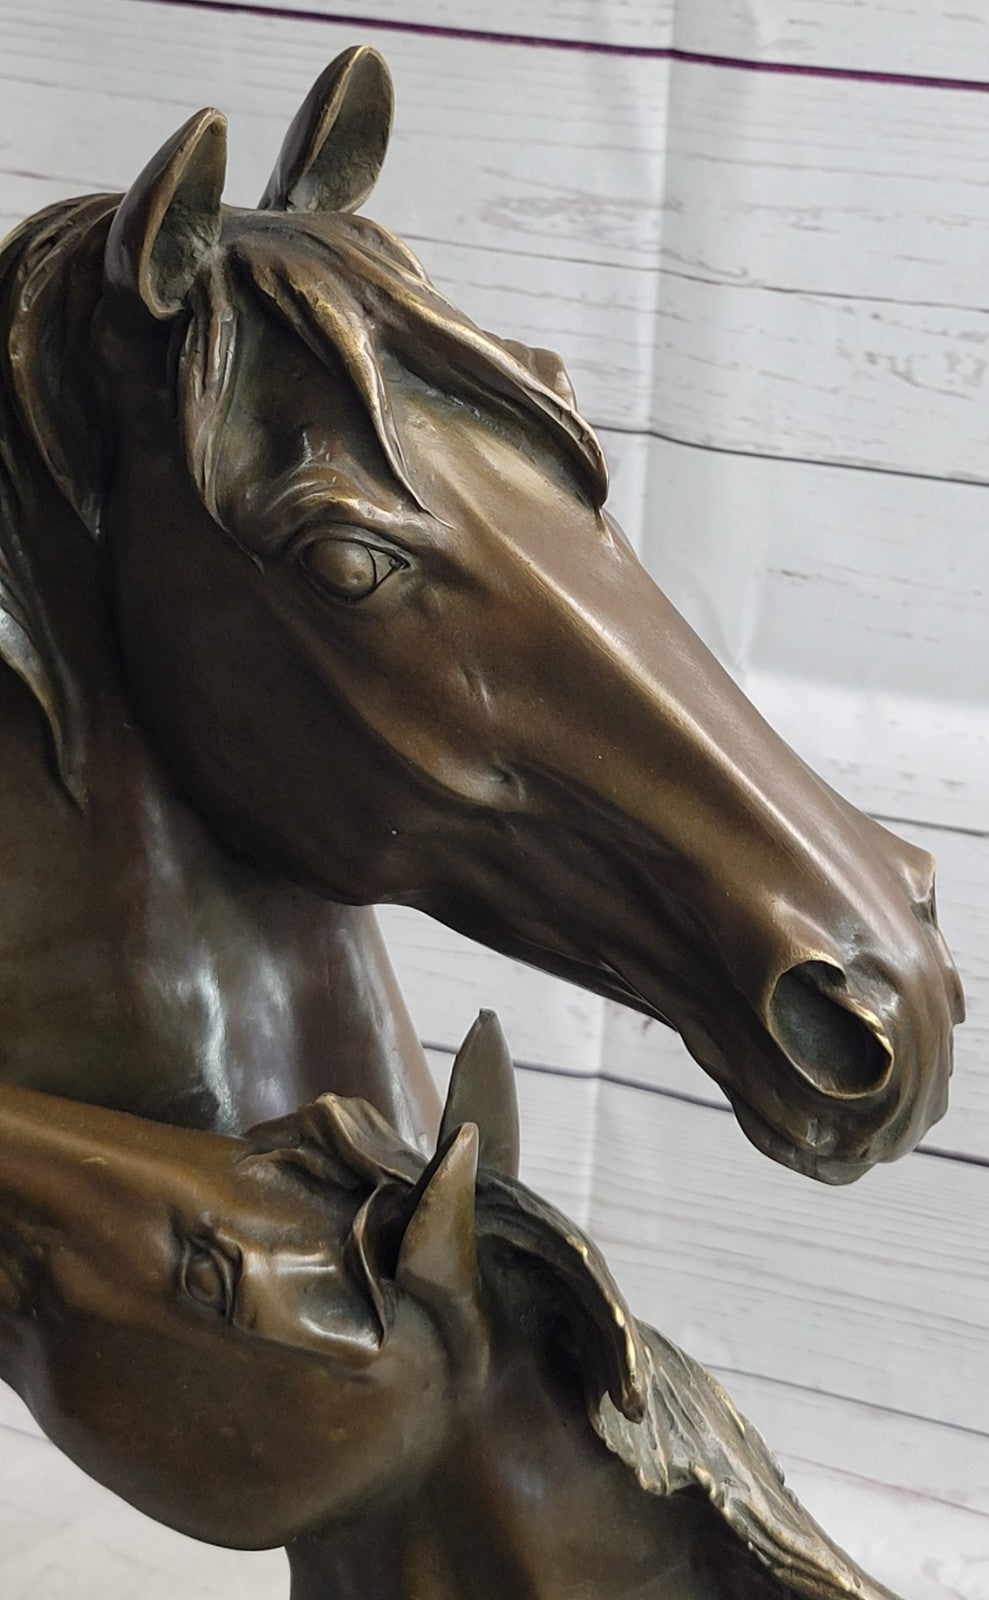 Two Horses Head Bust Bronze Sculpture on Marble Base Figurine Artwork Figure